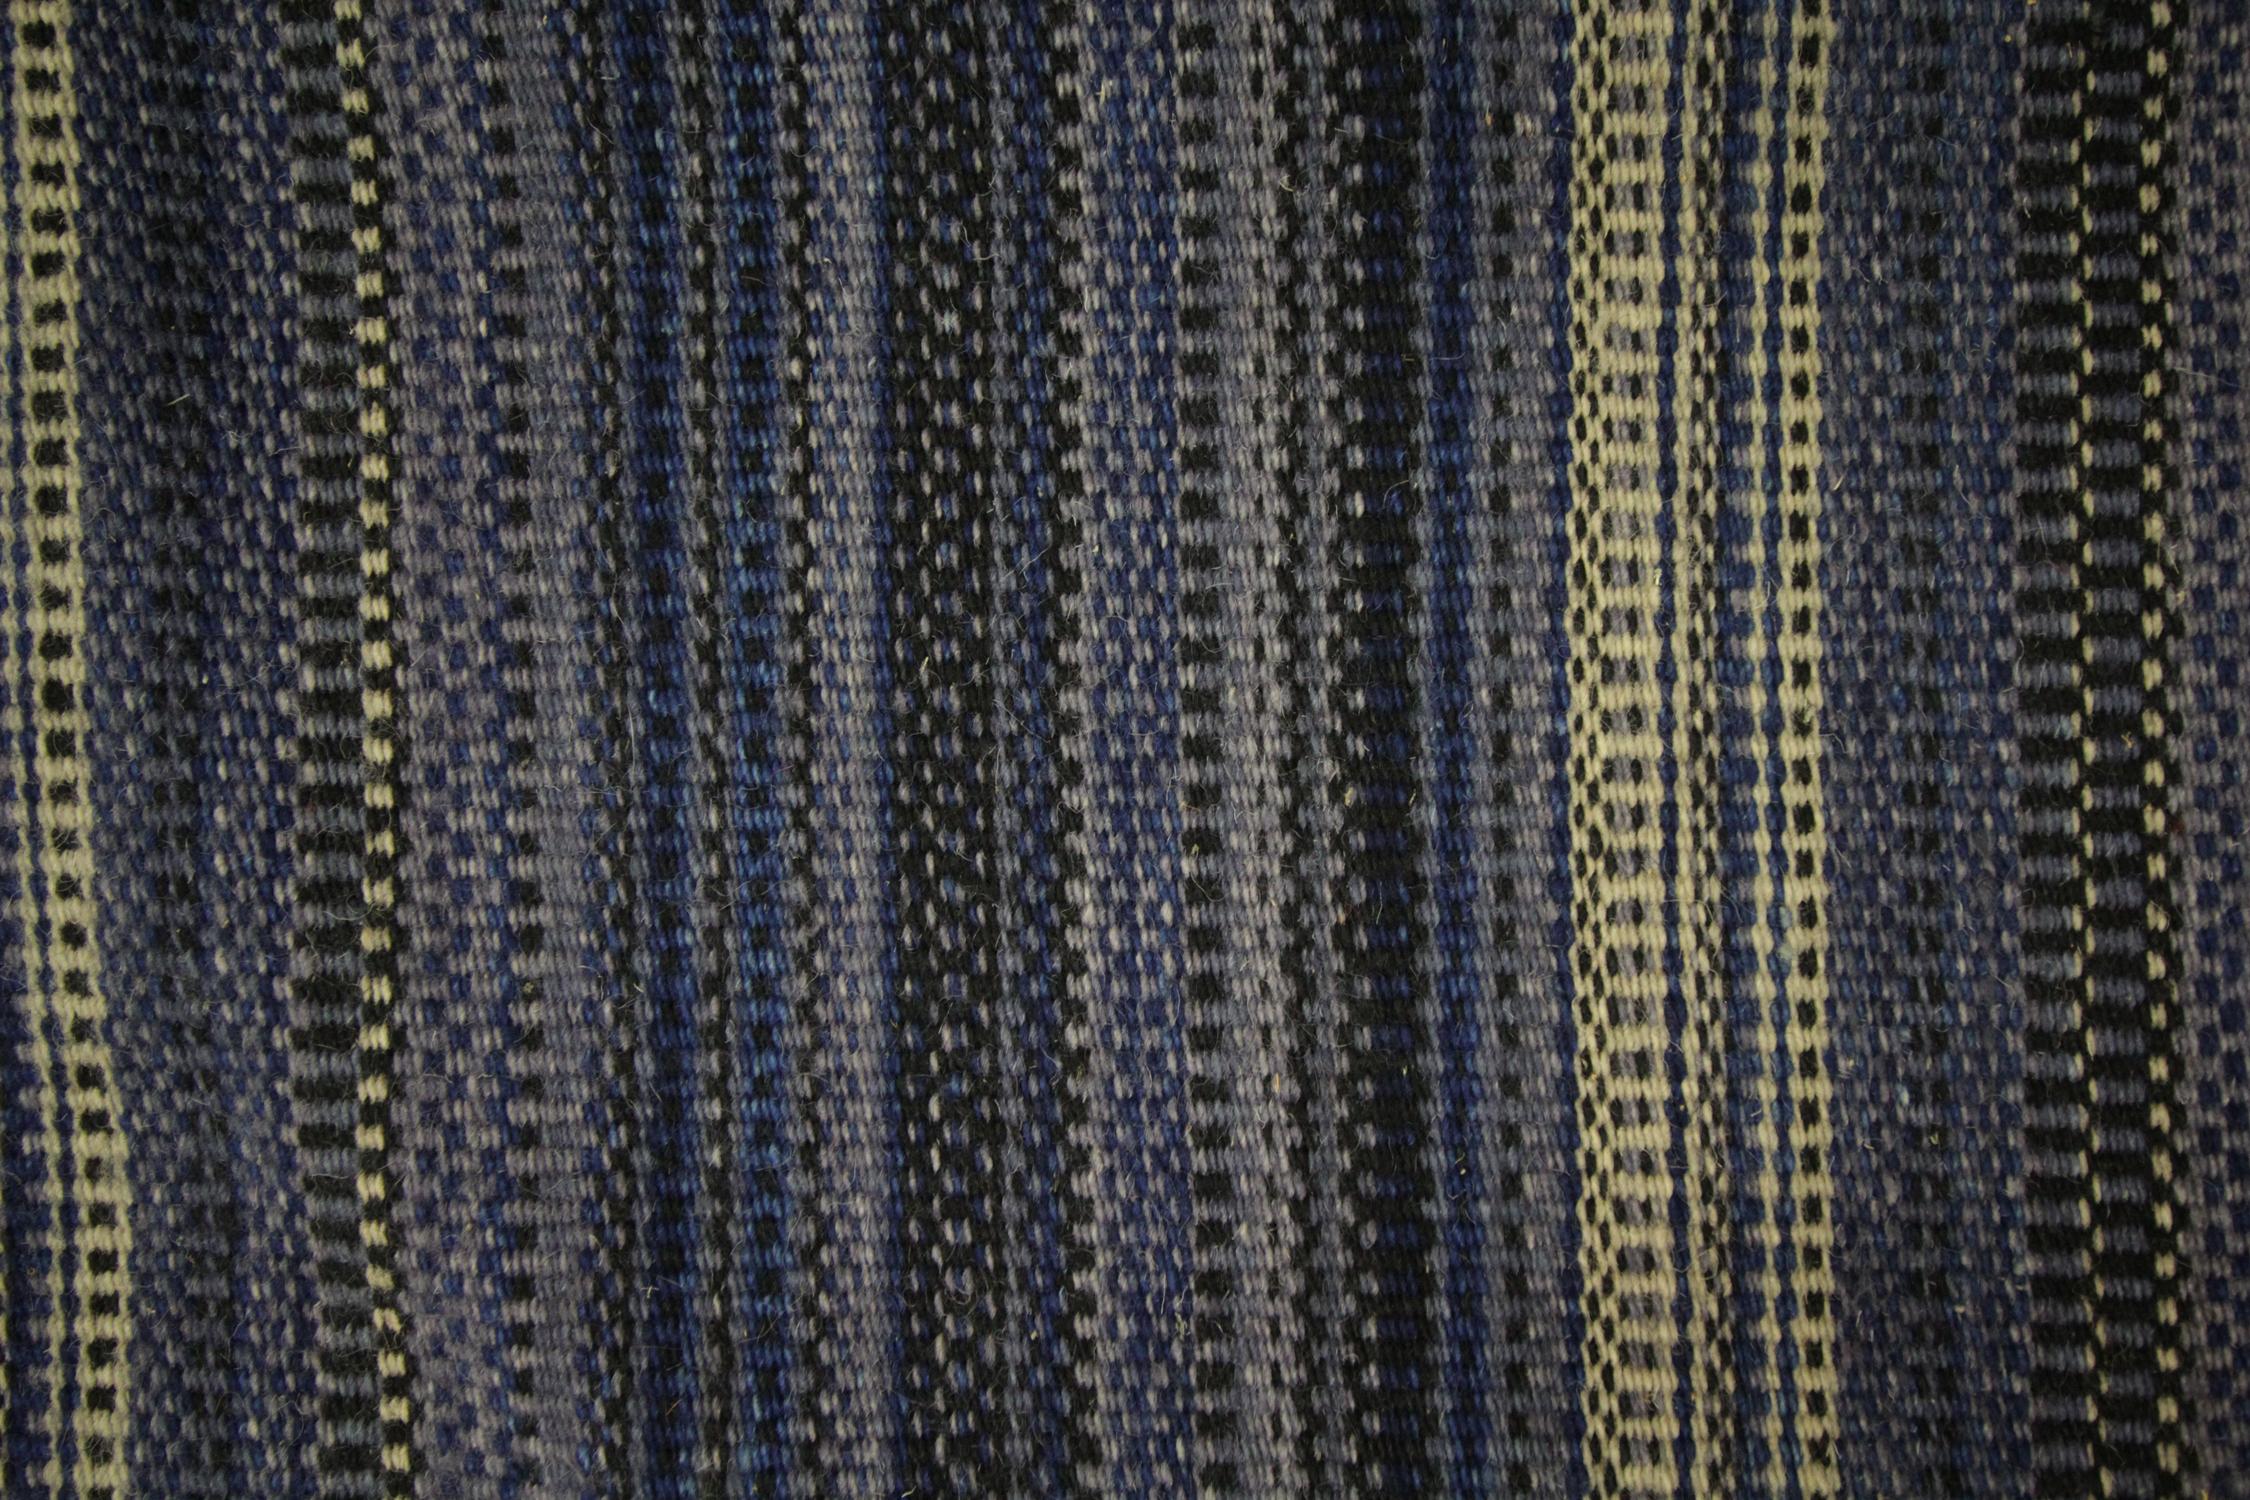 blue rugs